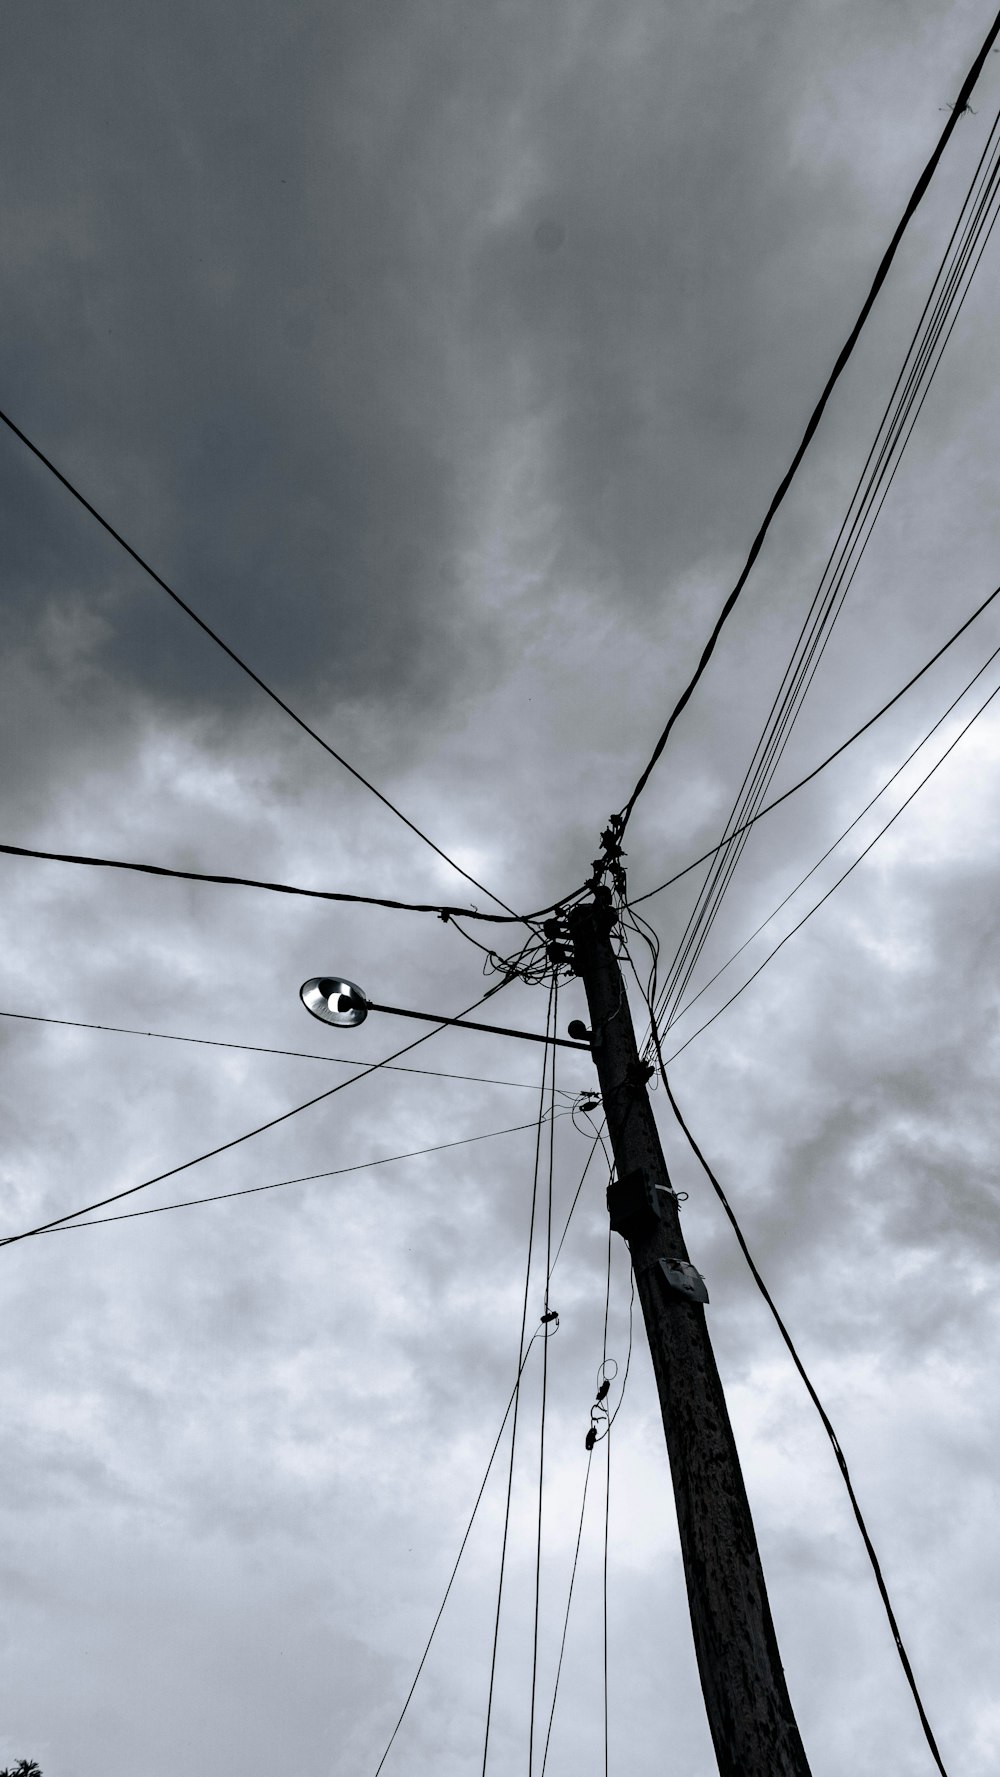 a black and white photo of a telephone pole